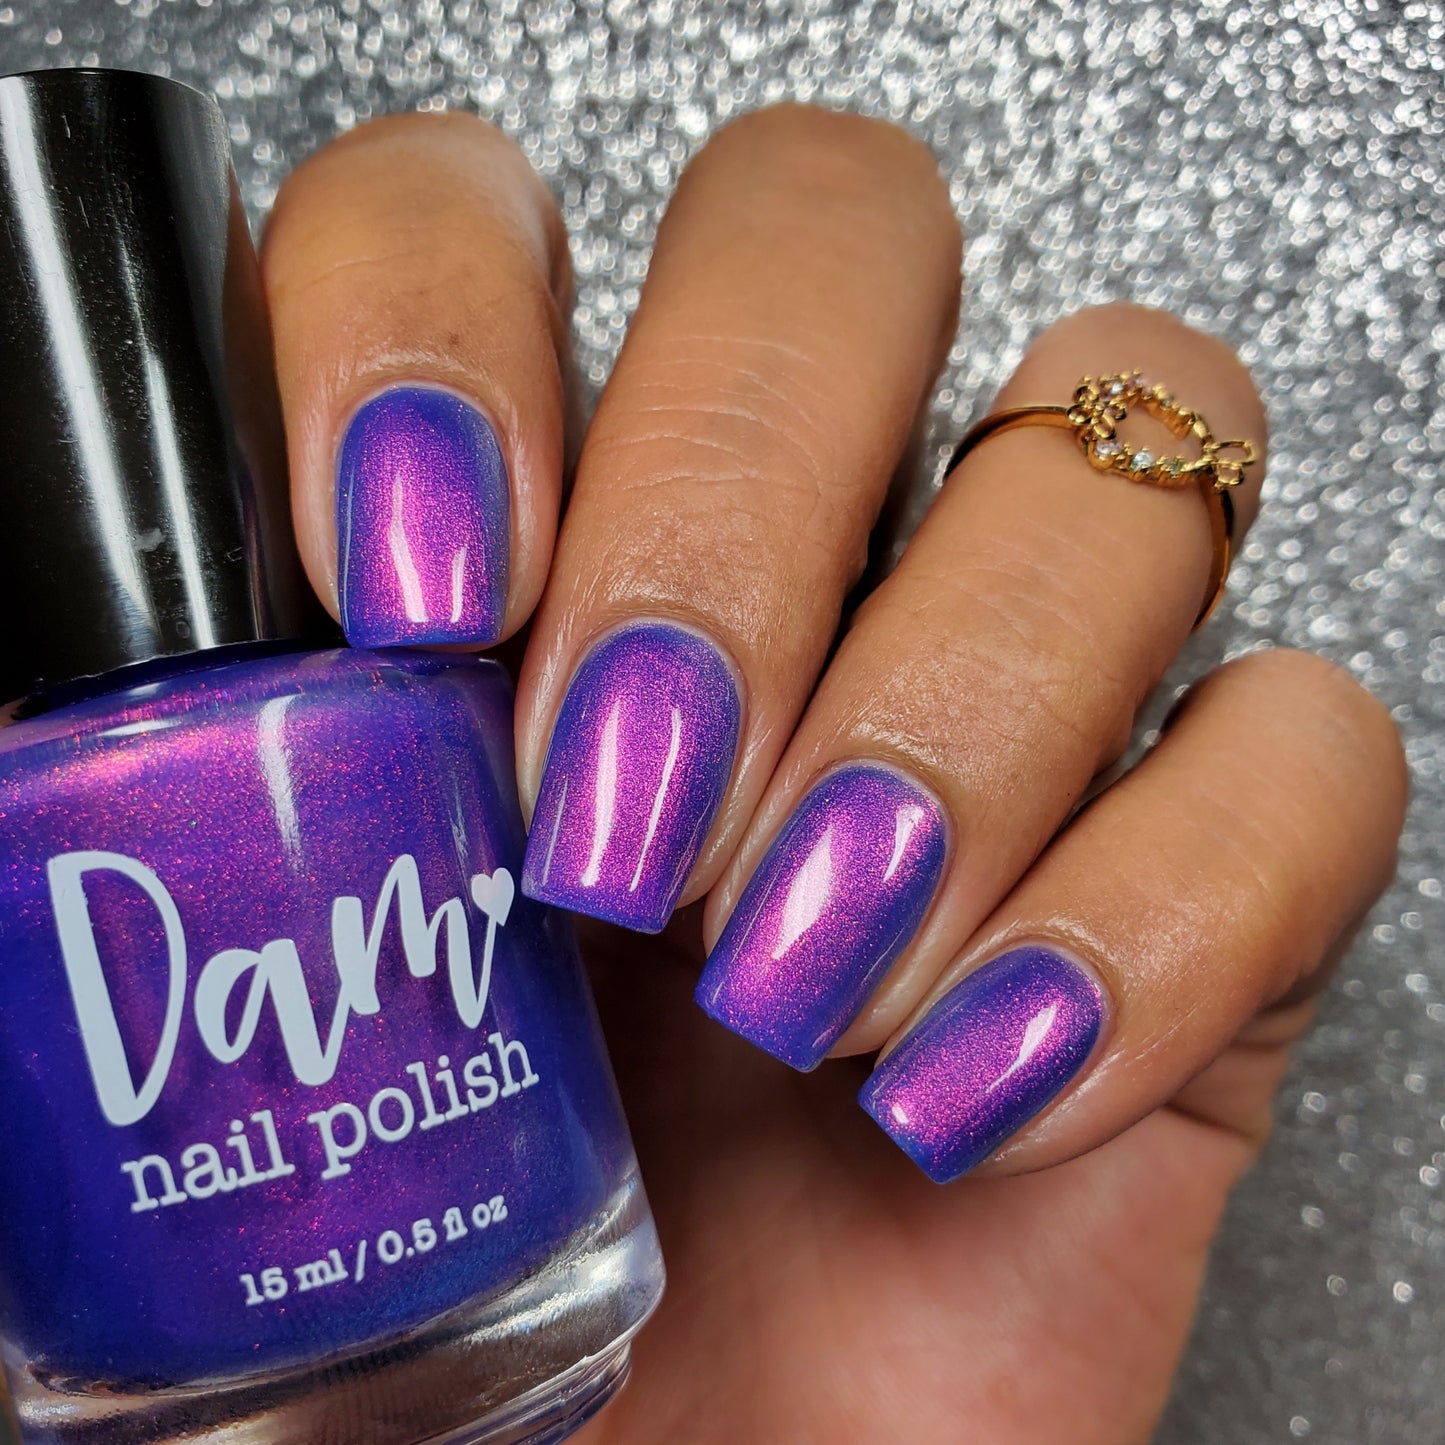 Sunset Blues - Blue Purple Shimmer Nail Polish - Dam